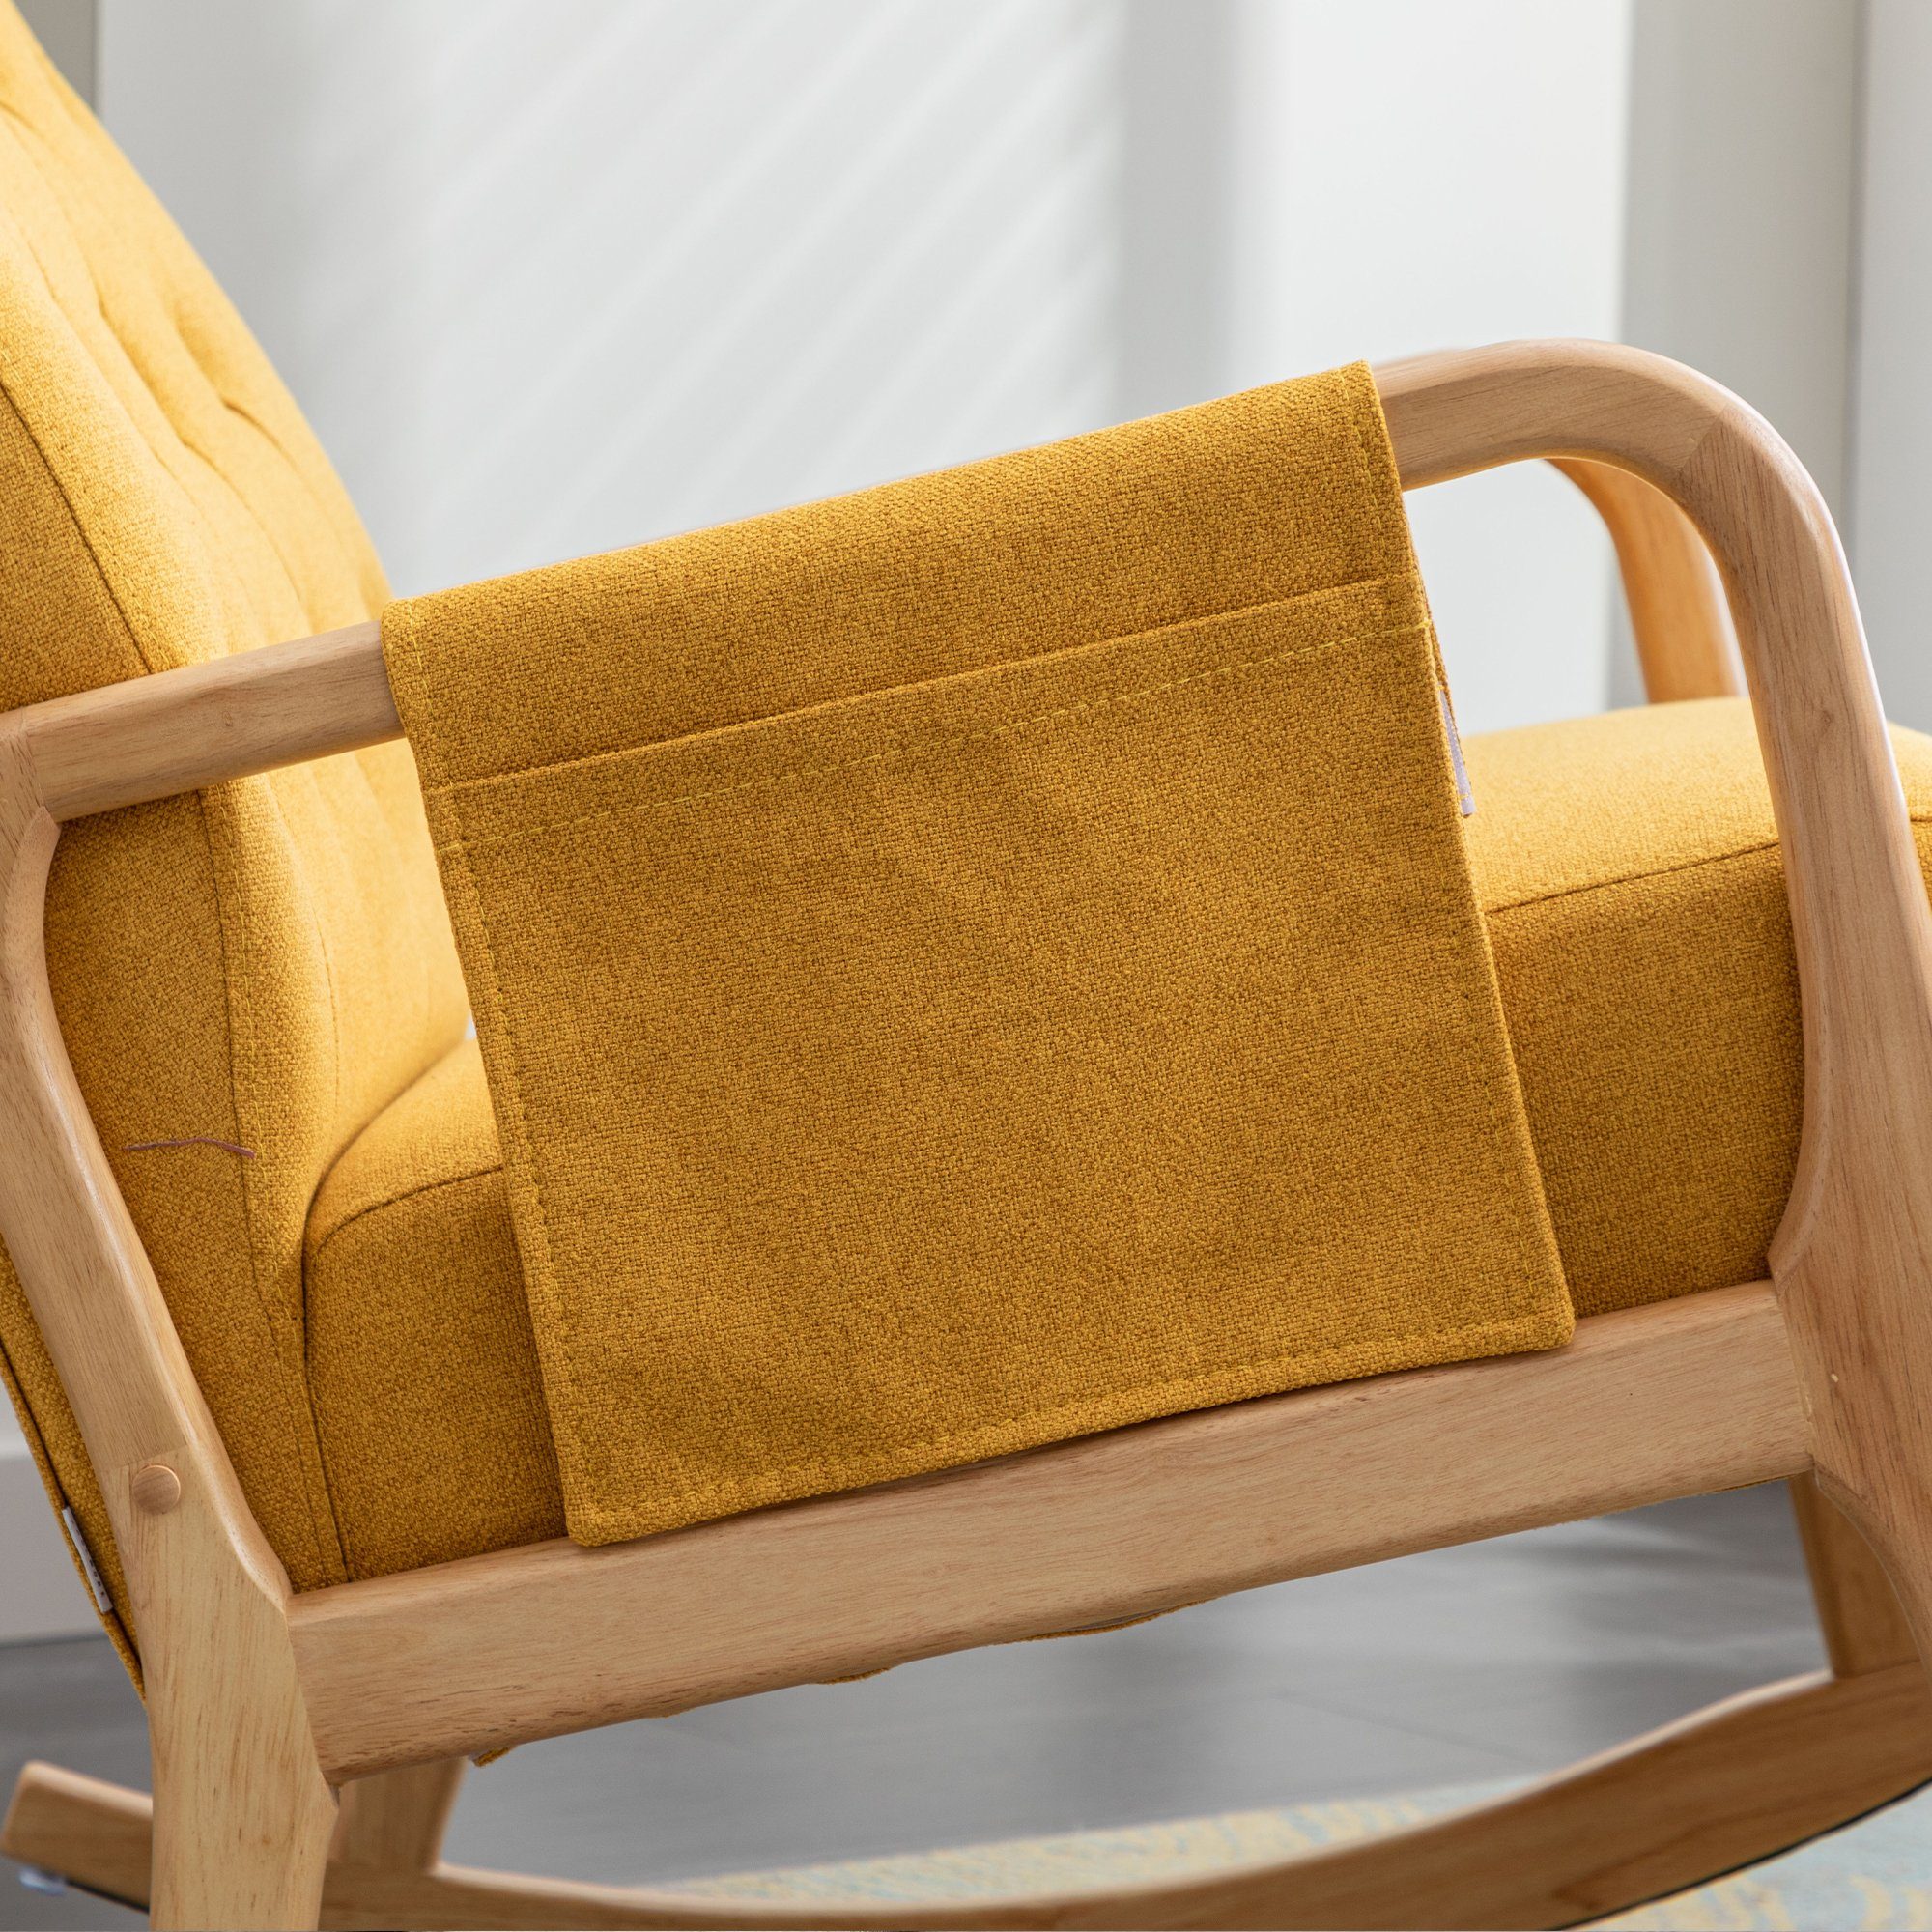 mehrfarbig Lounge-Sessel Schaukelstuhl Odikalo Gelb Einzelstuhl Rückenlehne mane gepolstert